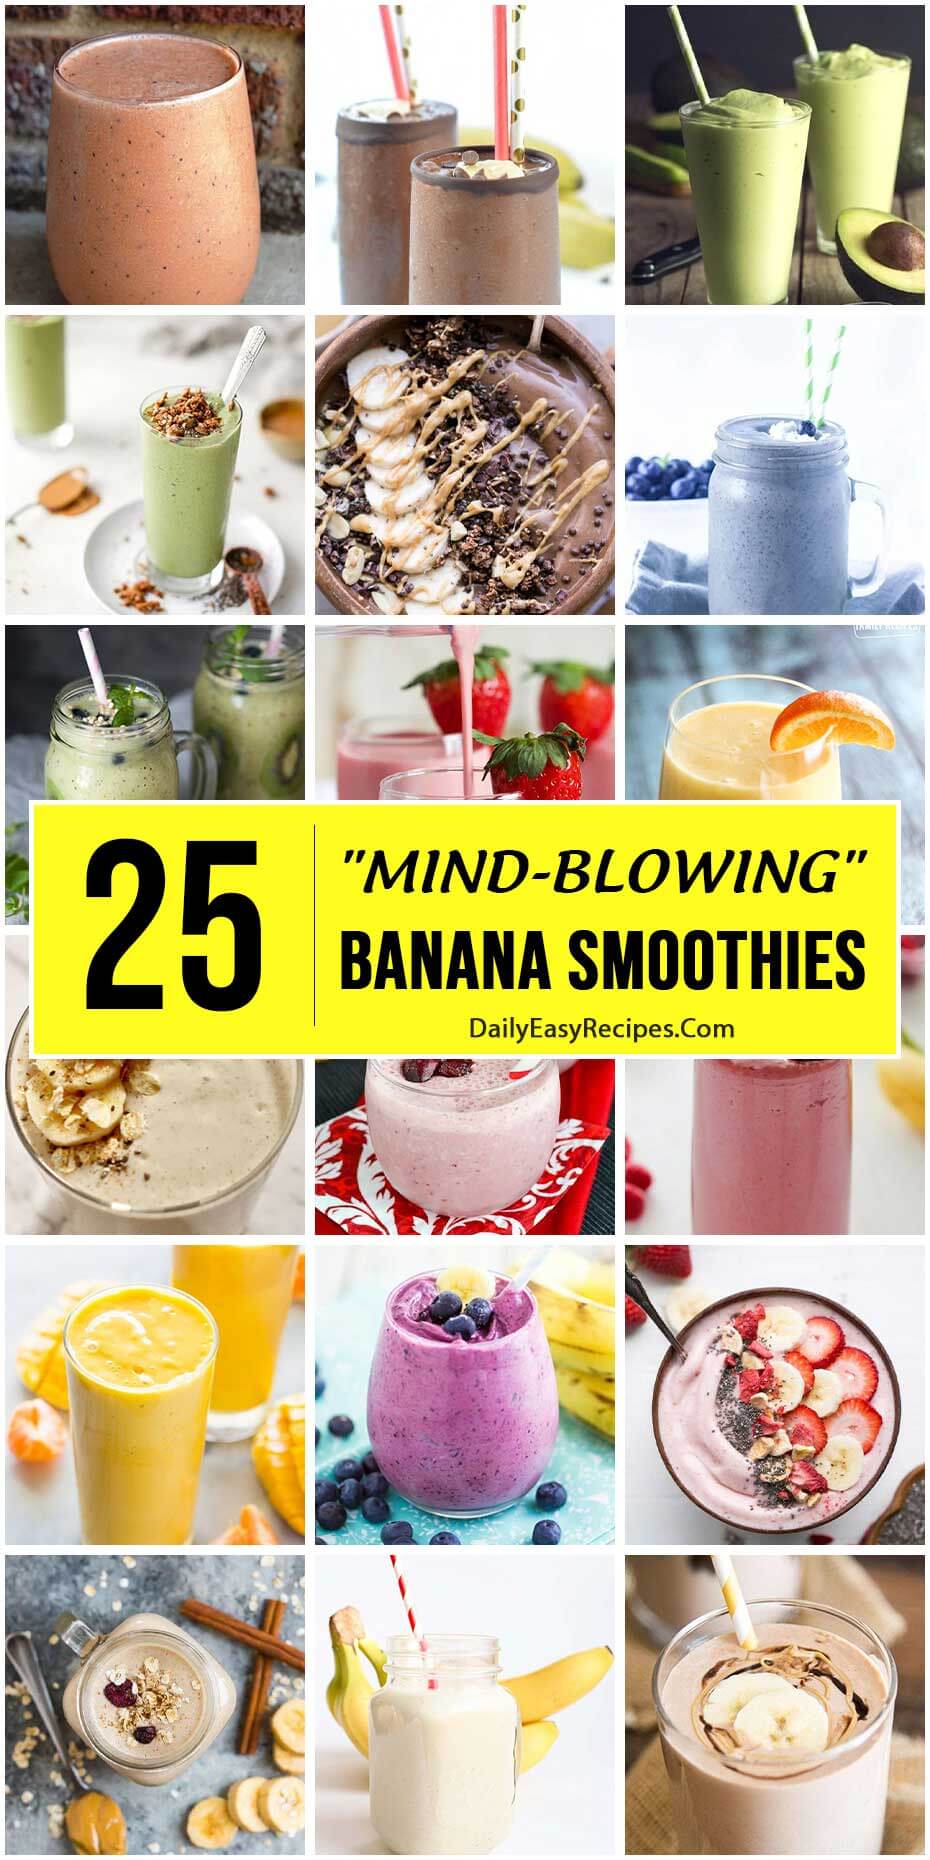 25 “Mind-Blowing” Banana Smoothies